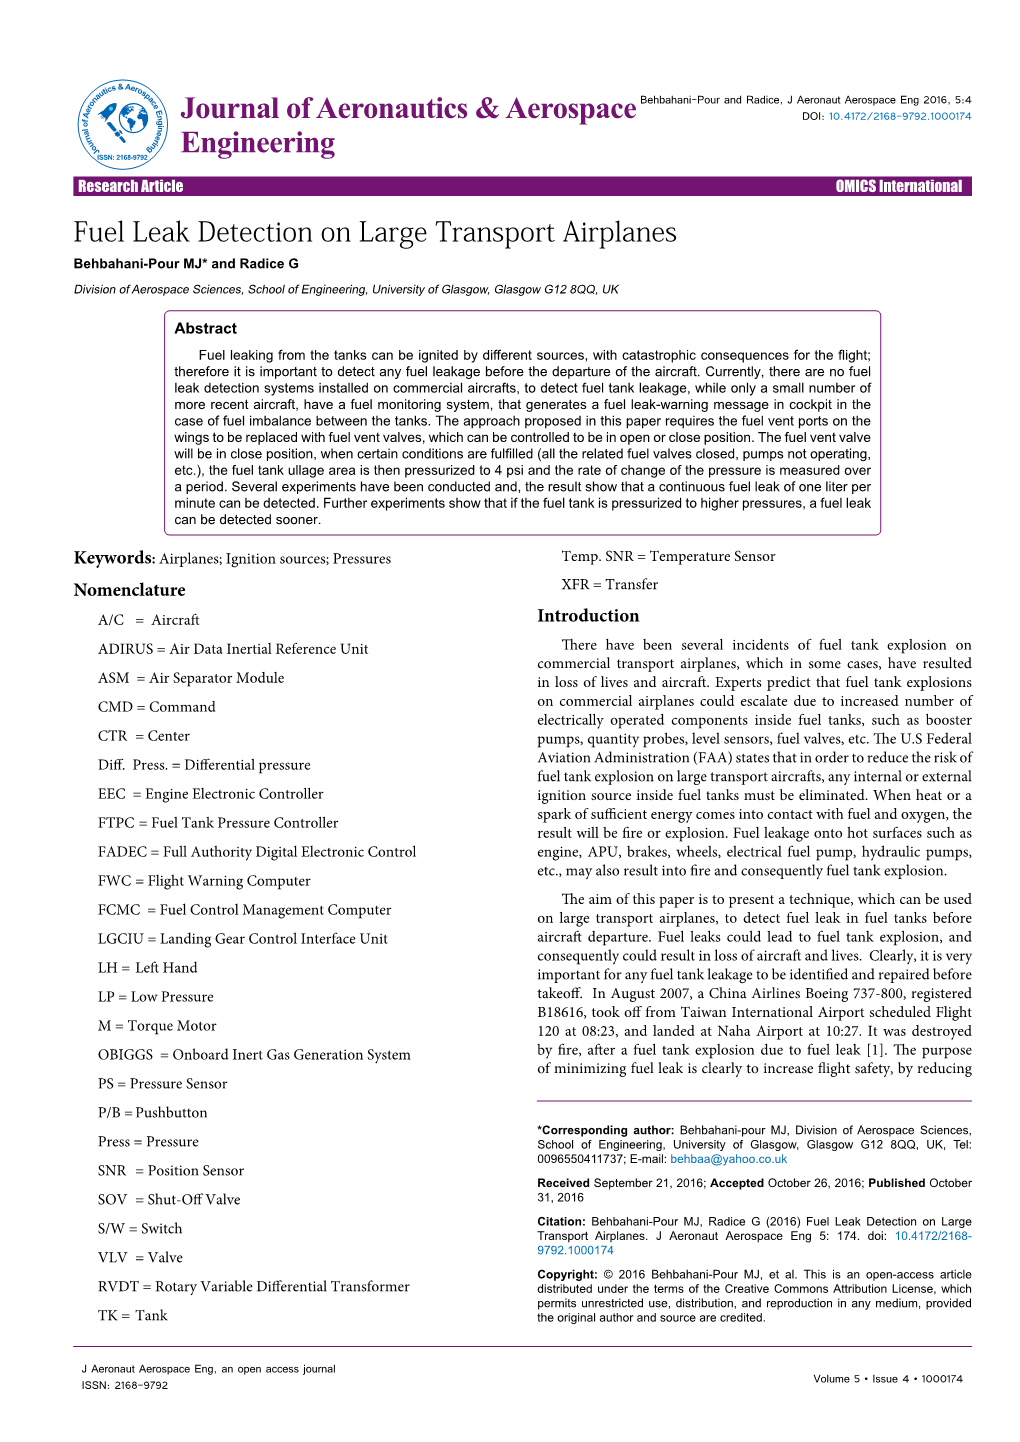 Fuel Leak Detection on Large Transport Airplanes